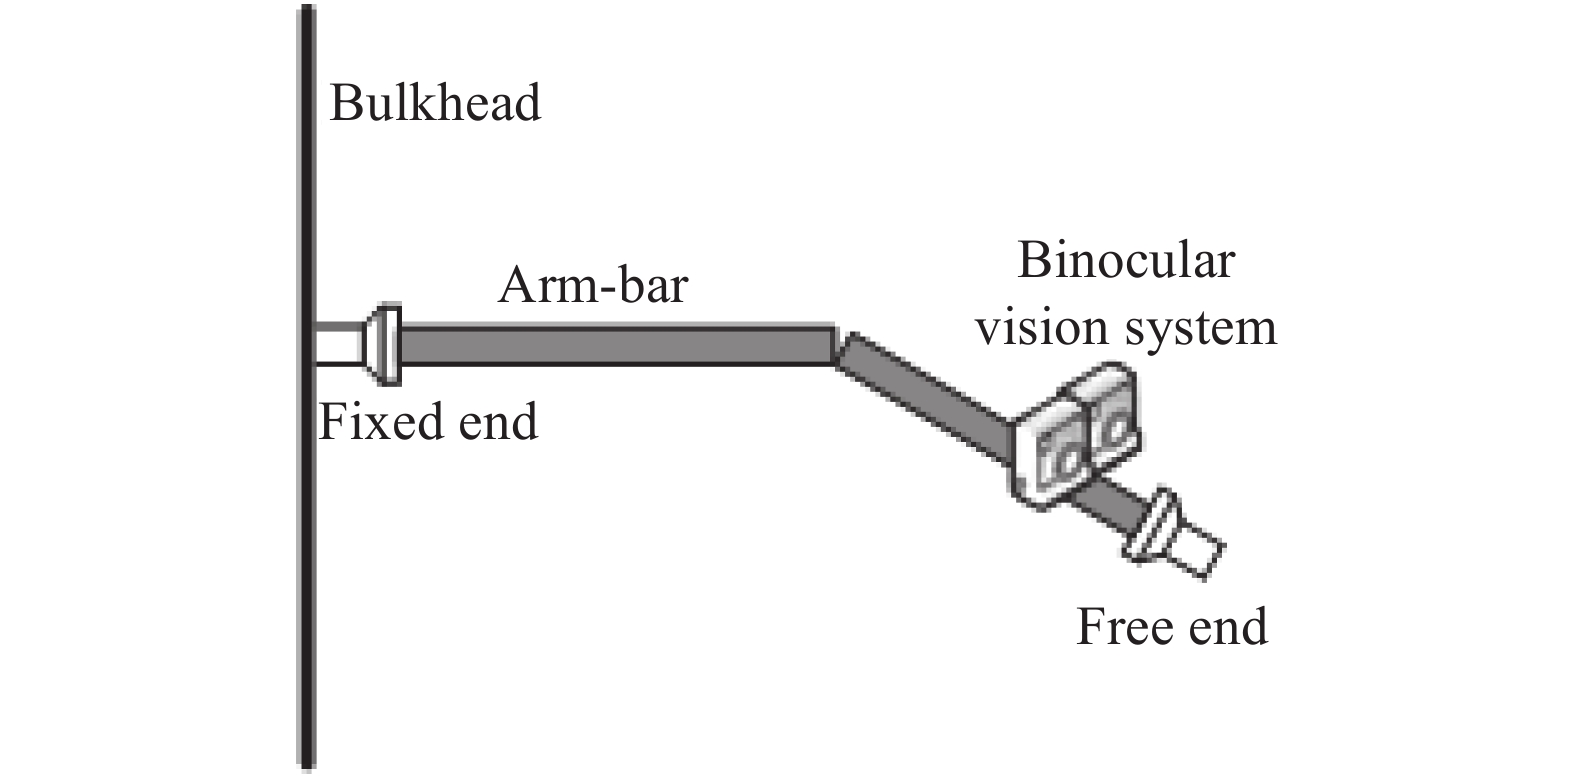 Binocular vision system